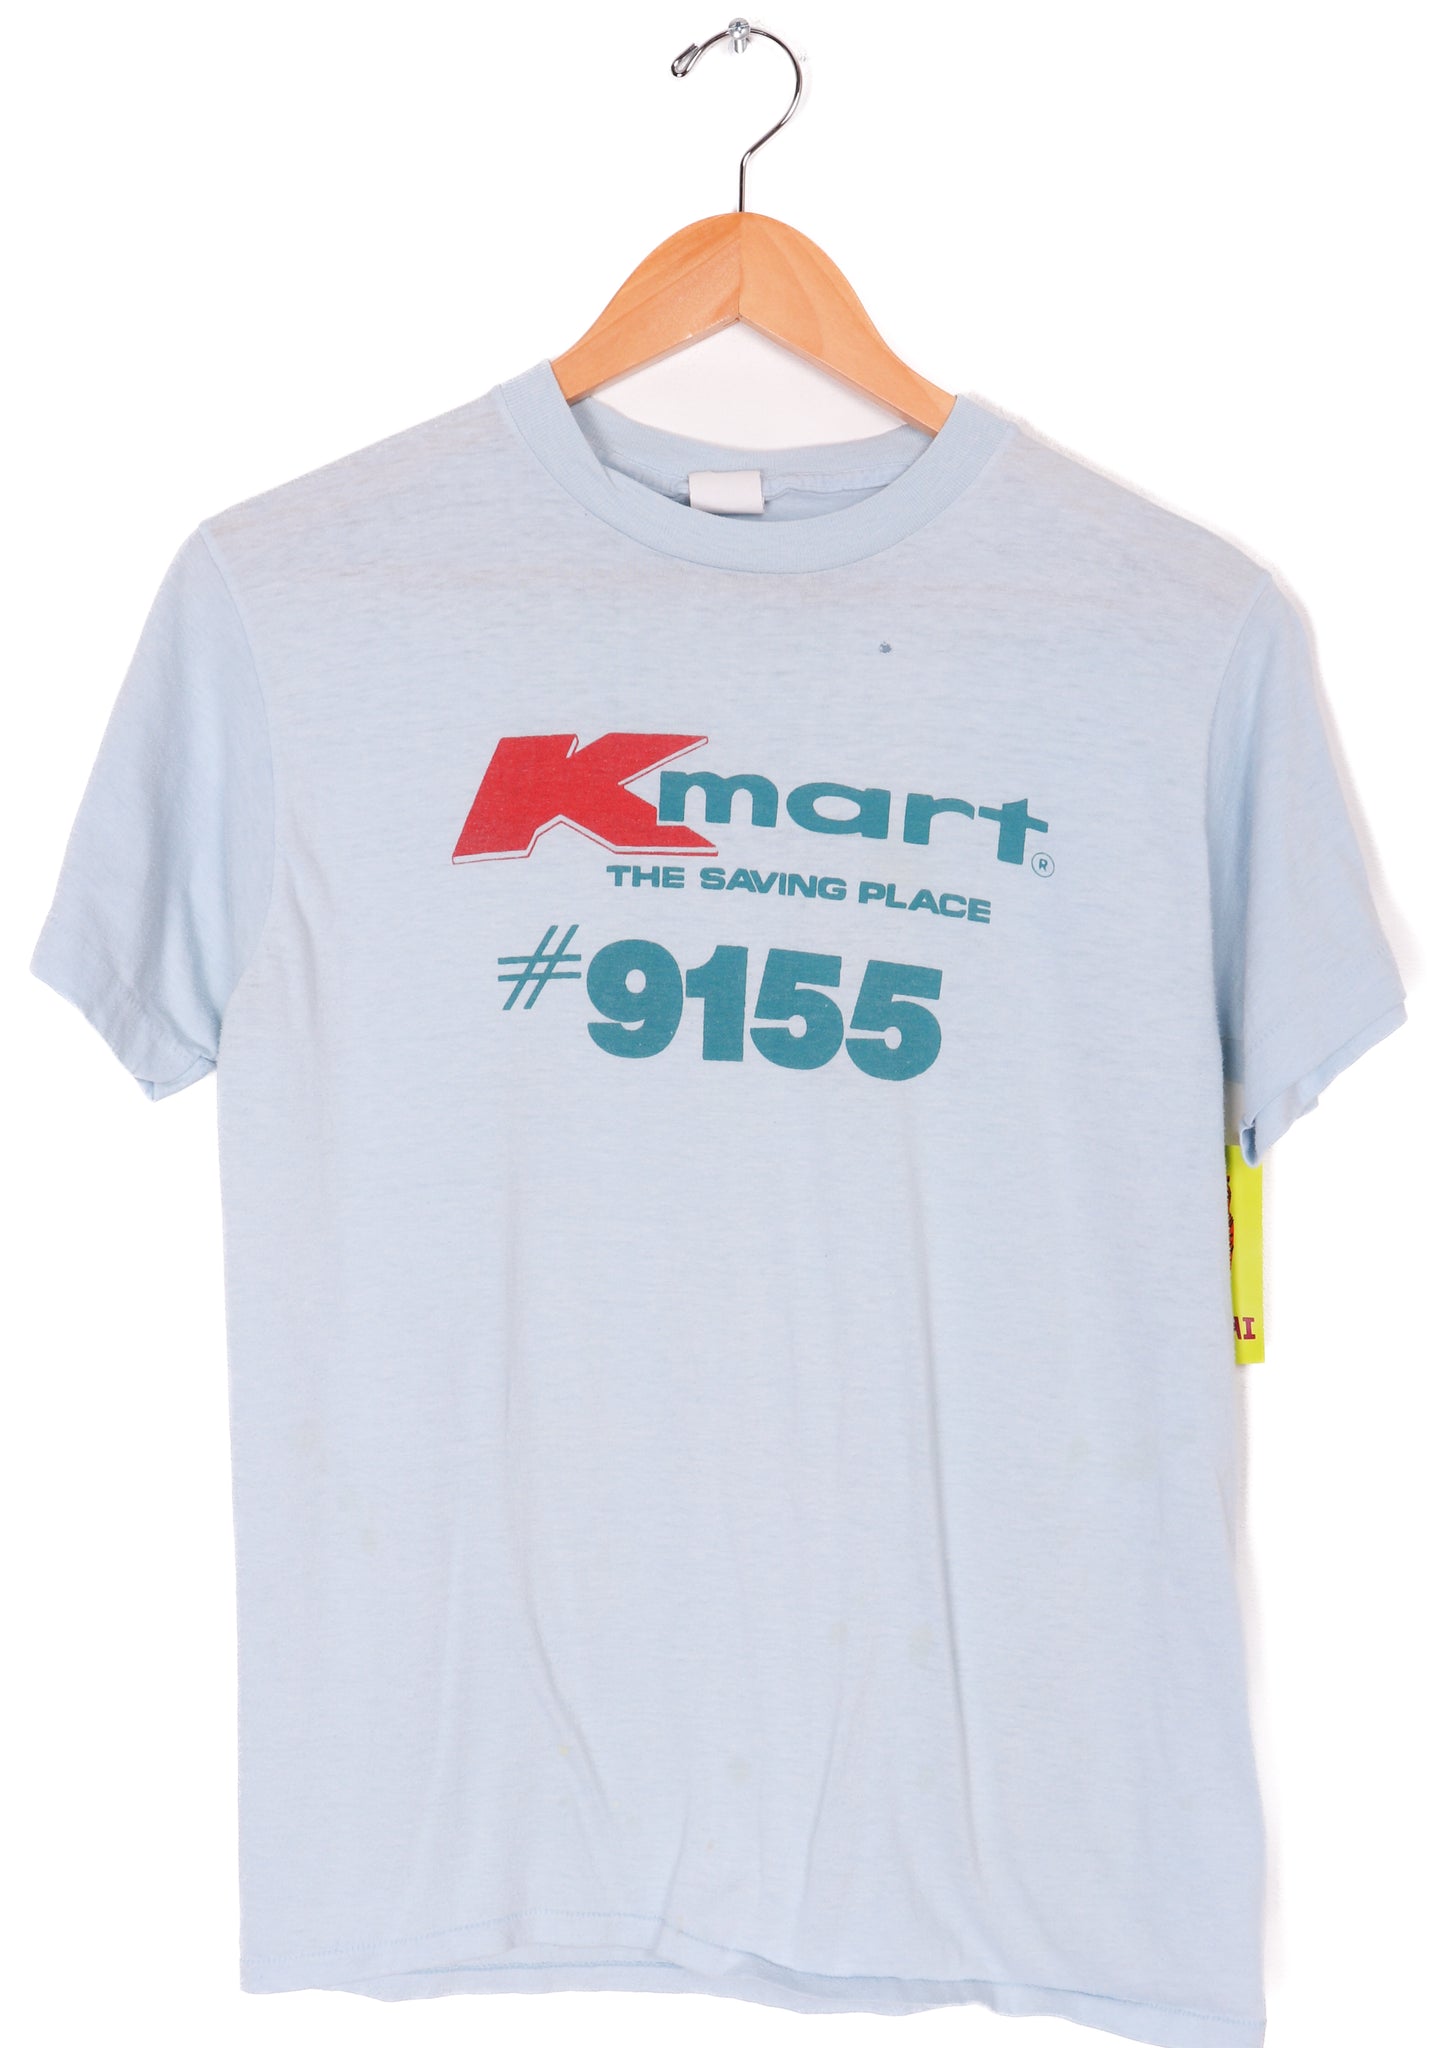 70s-80s Kmart #9155 T-Shirt